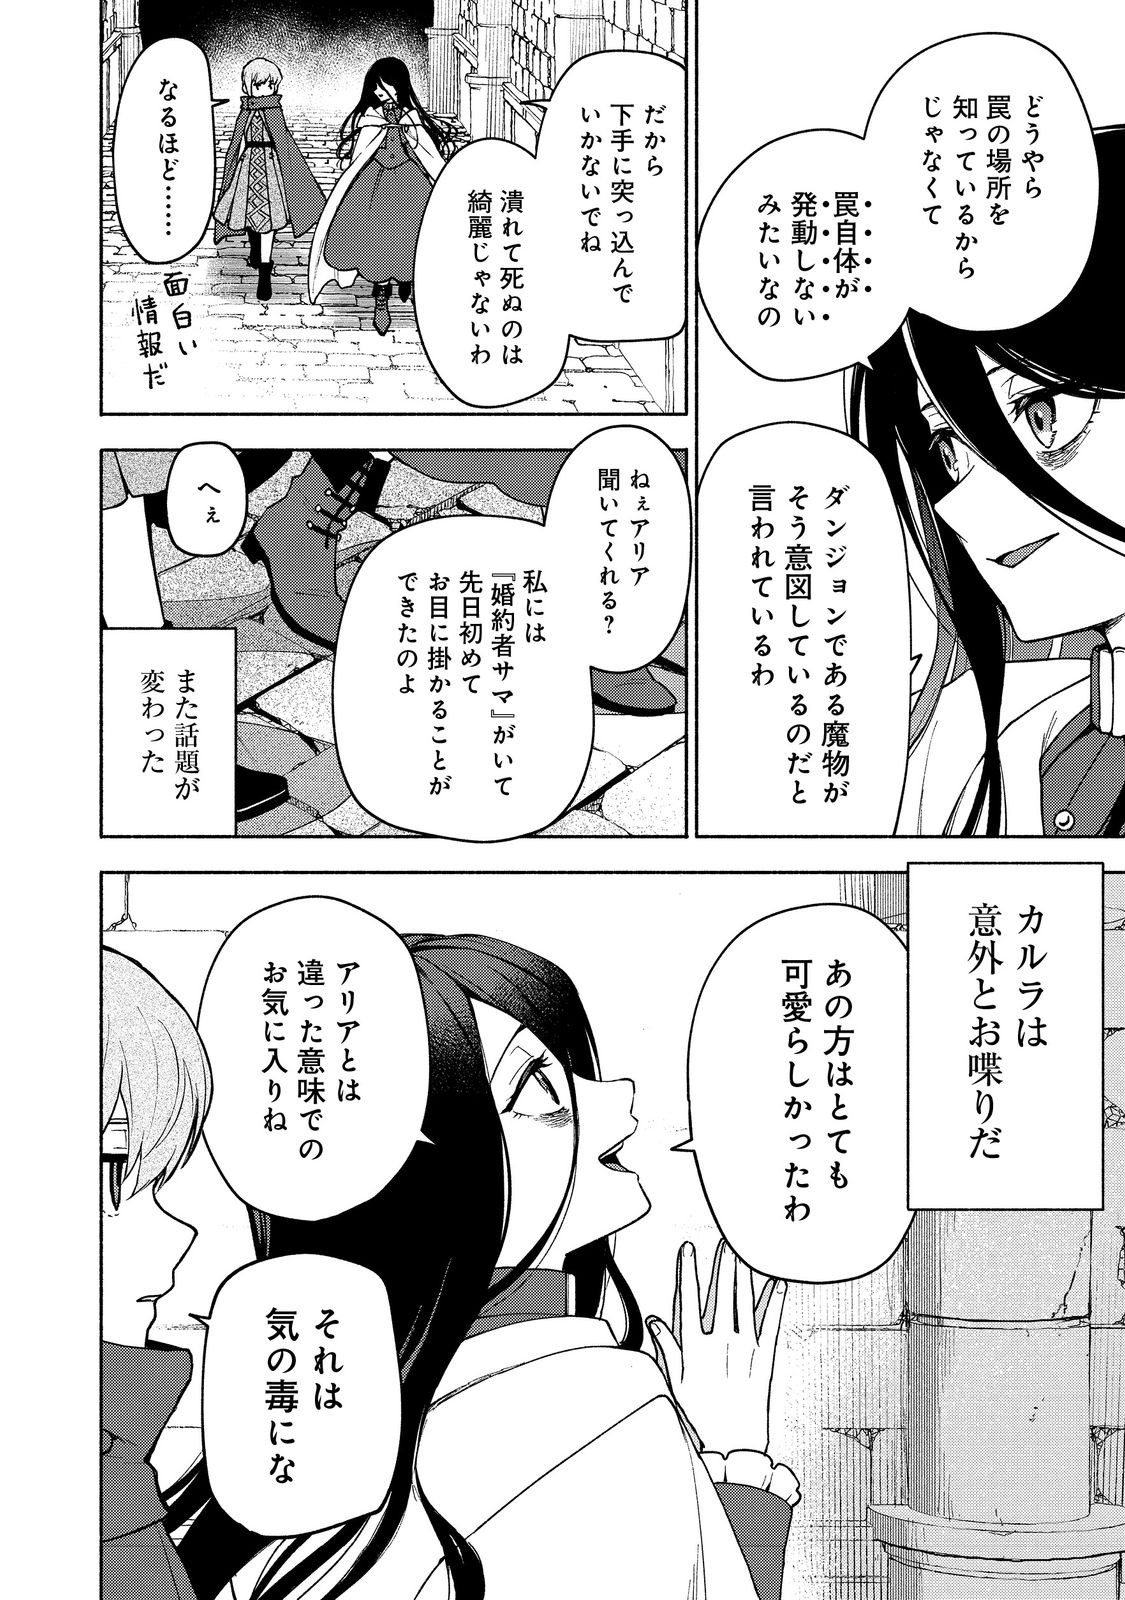 Otome Game no Heroine de Saikyou Survival - Chapter 23 - Page 14